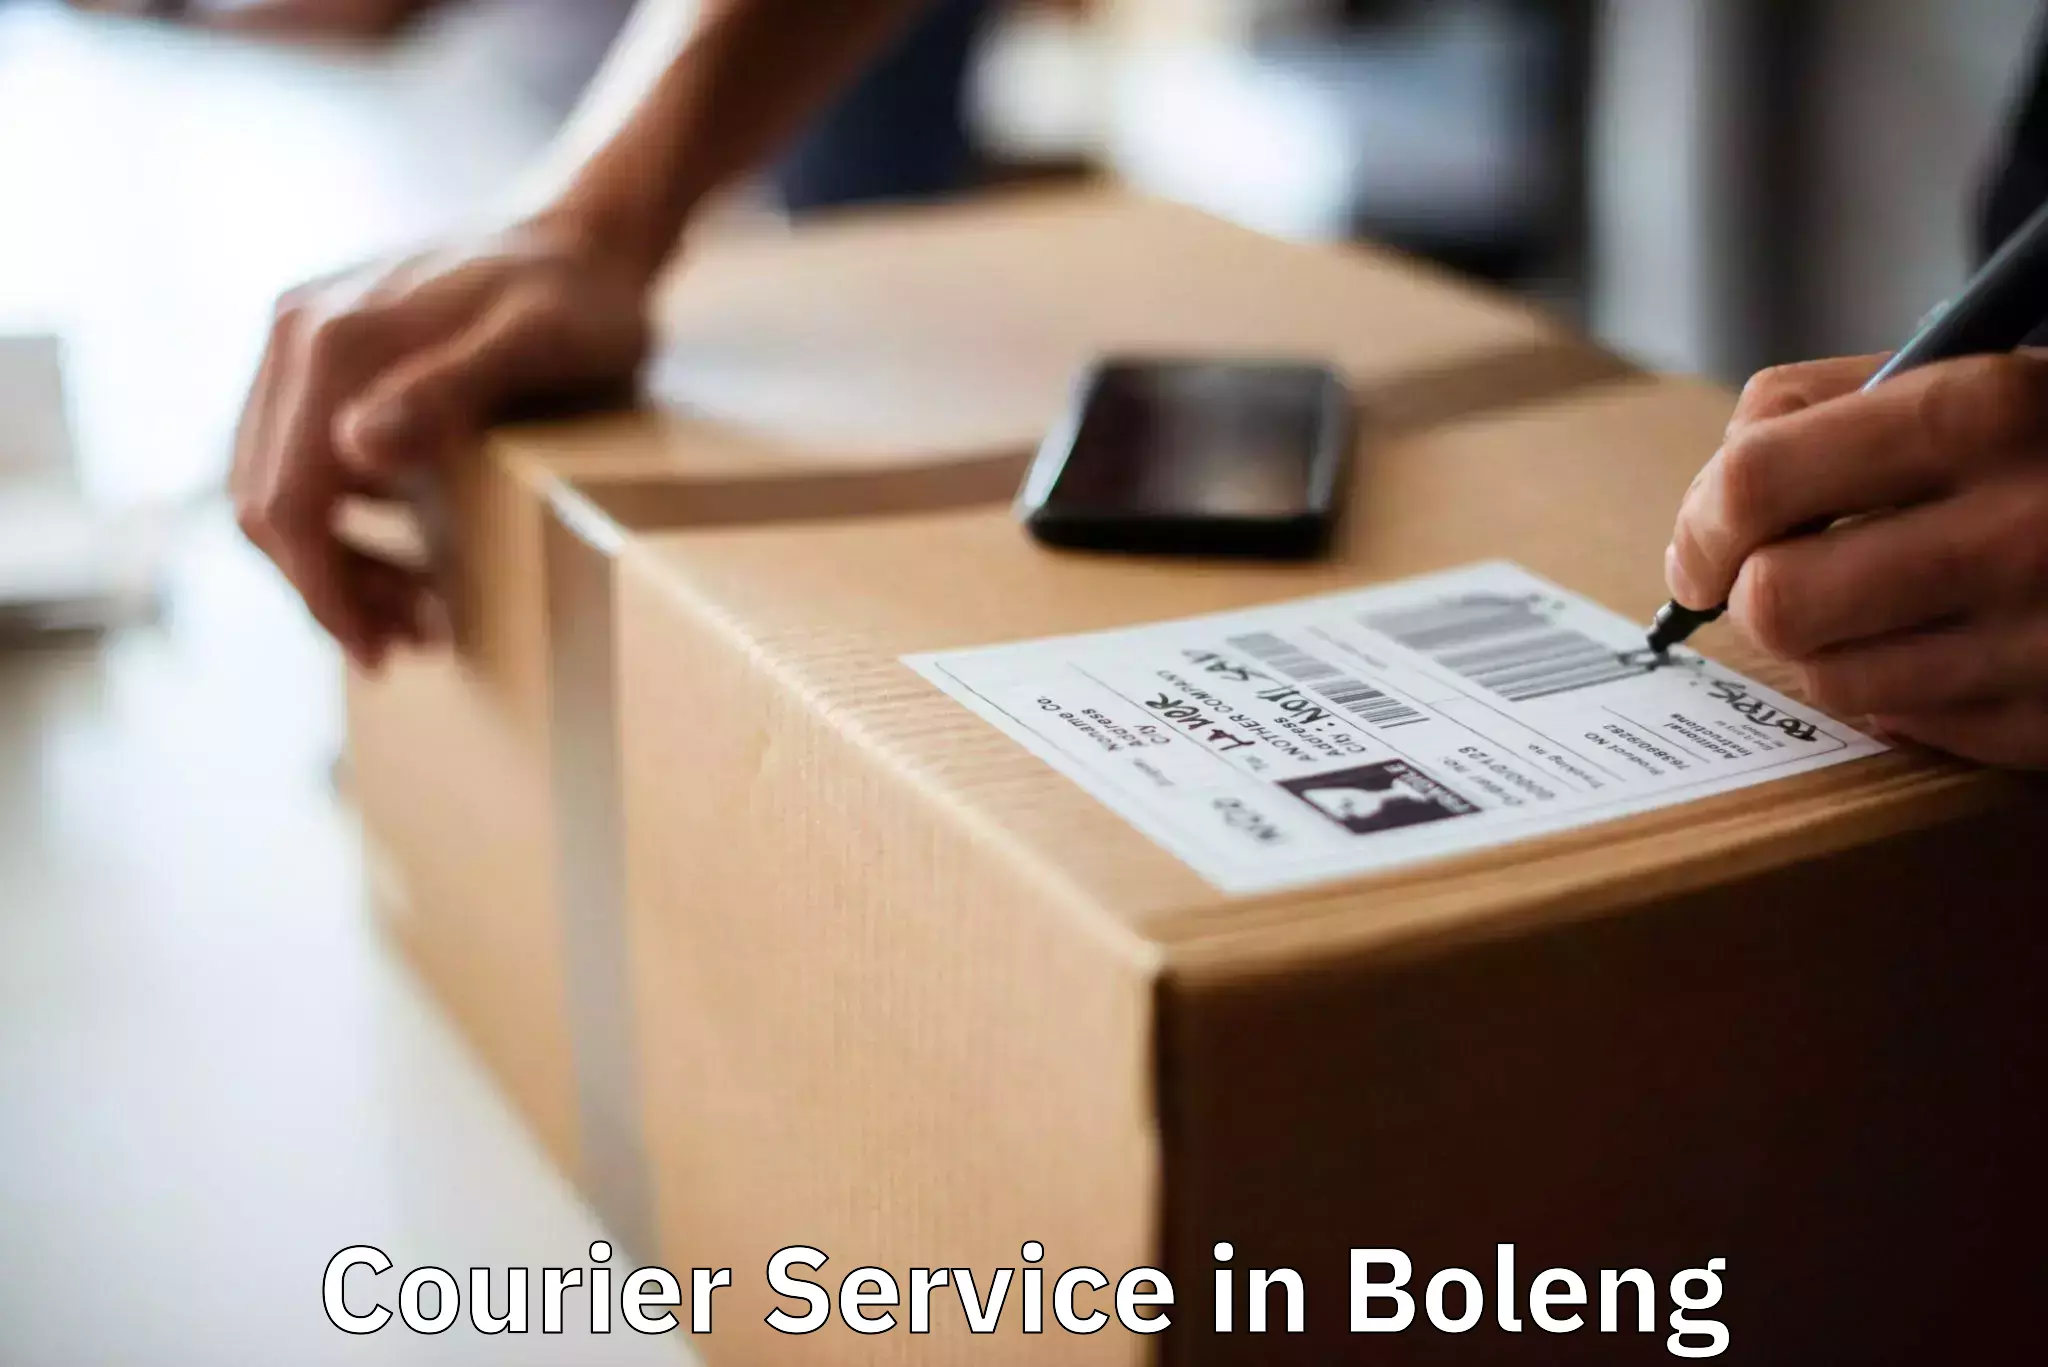 Flexible parcel services in Boleng